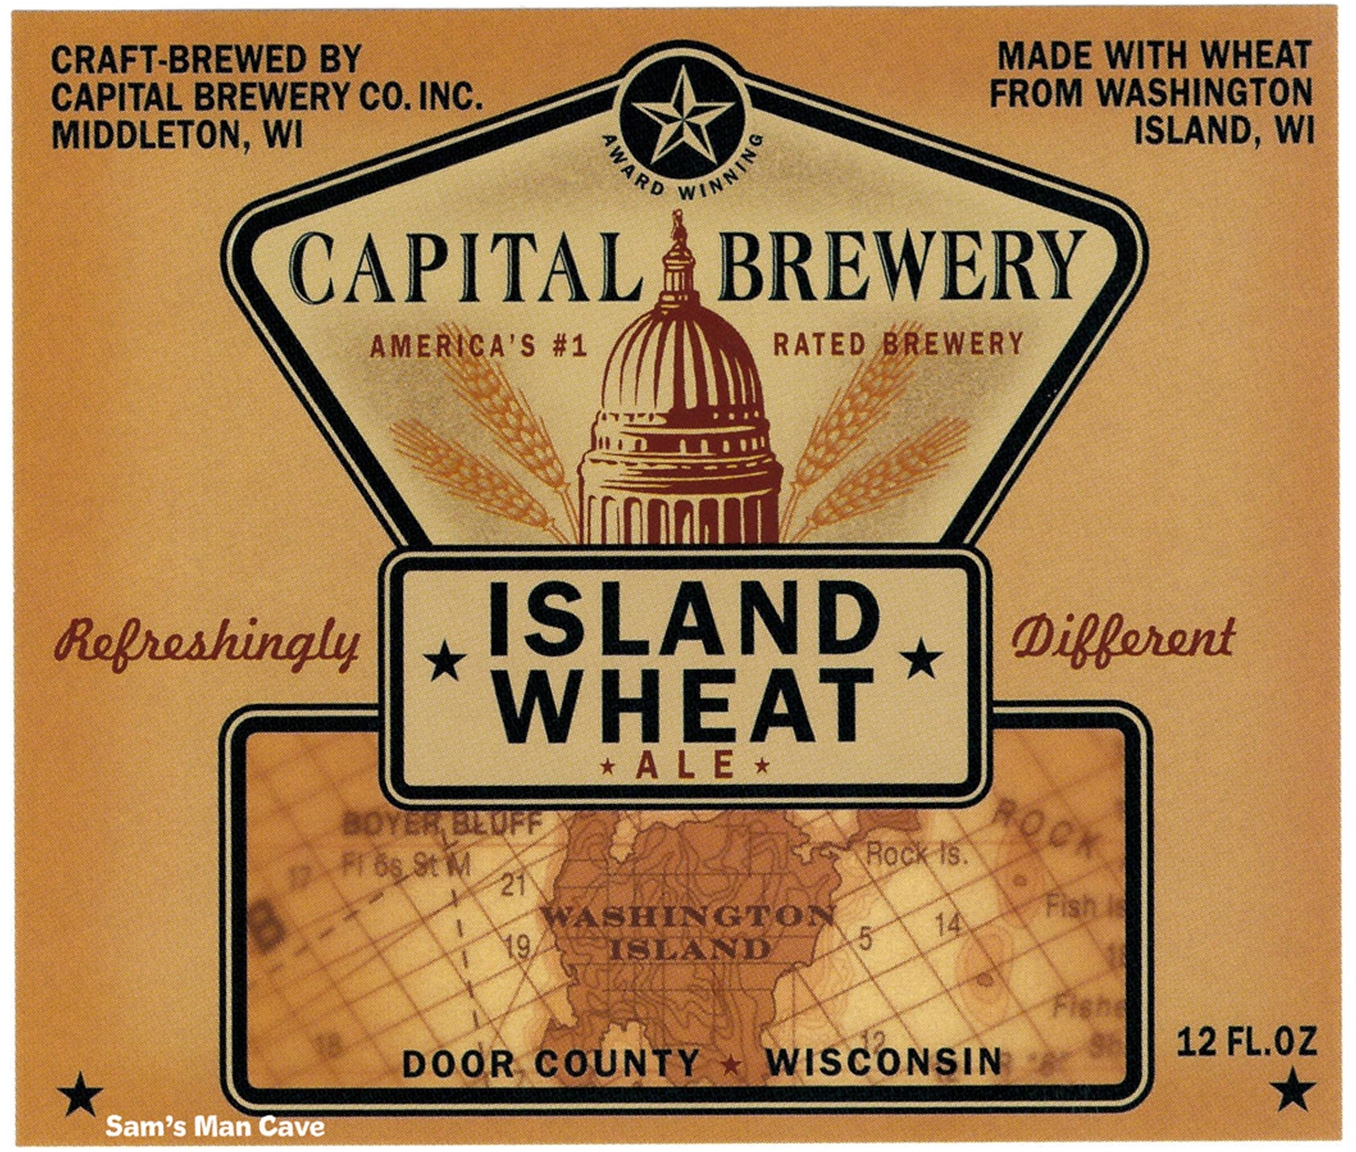 Capital Brewery Island Wheat Ale Label